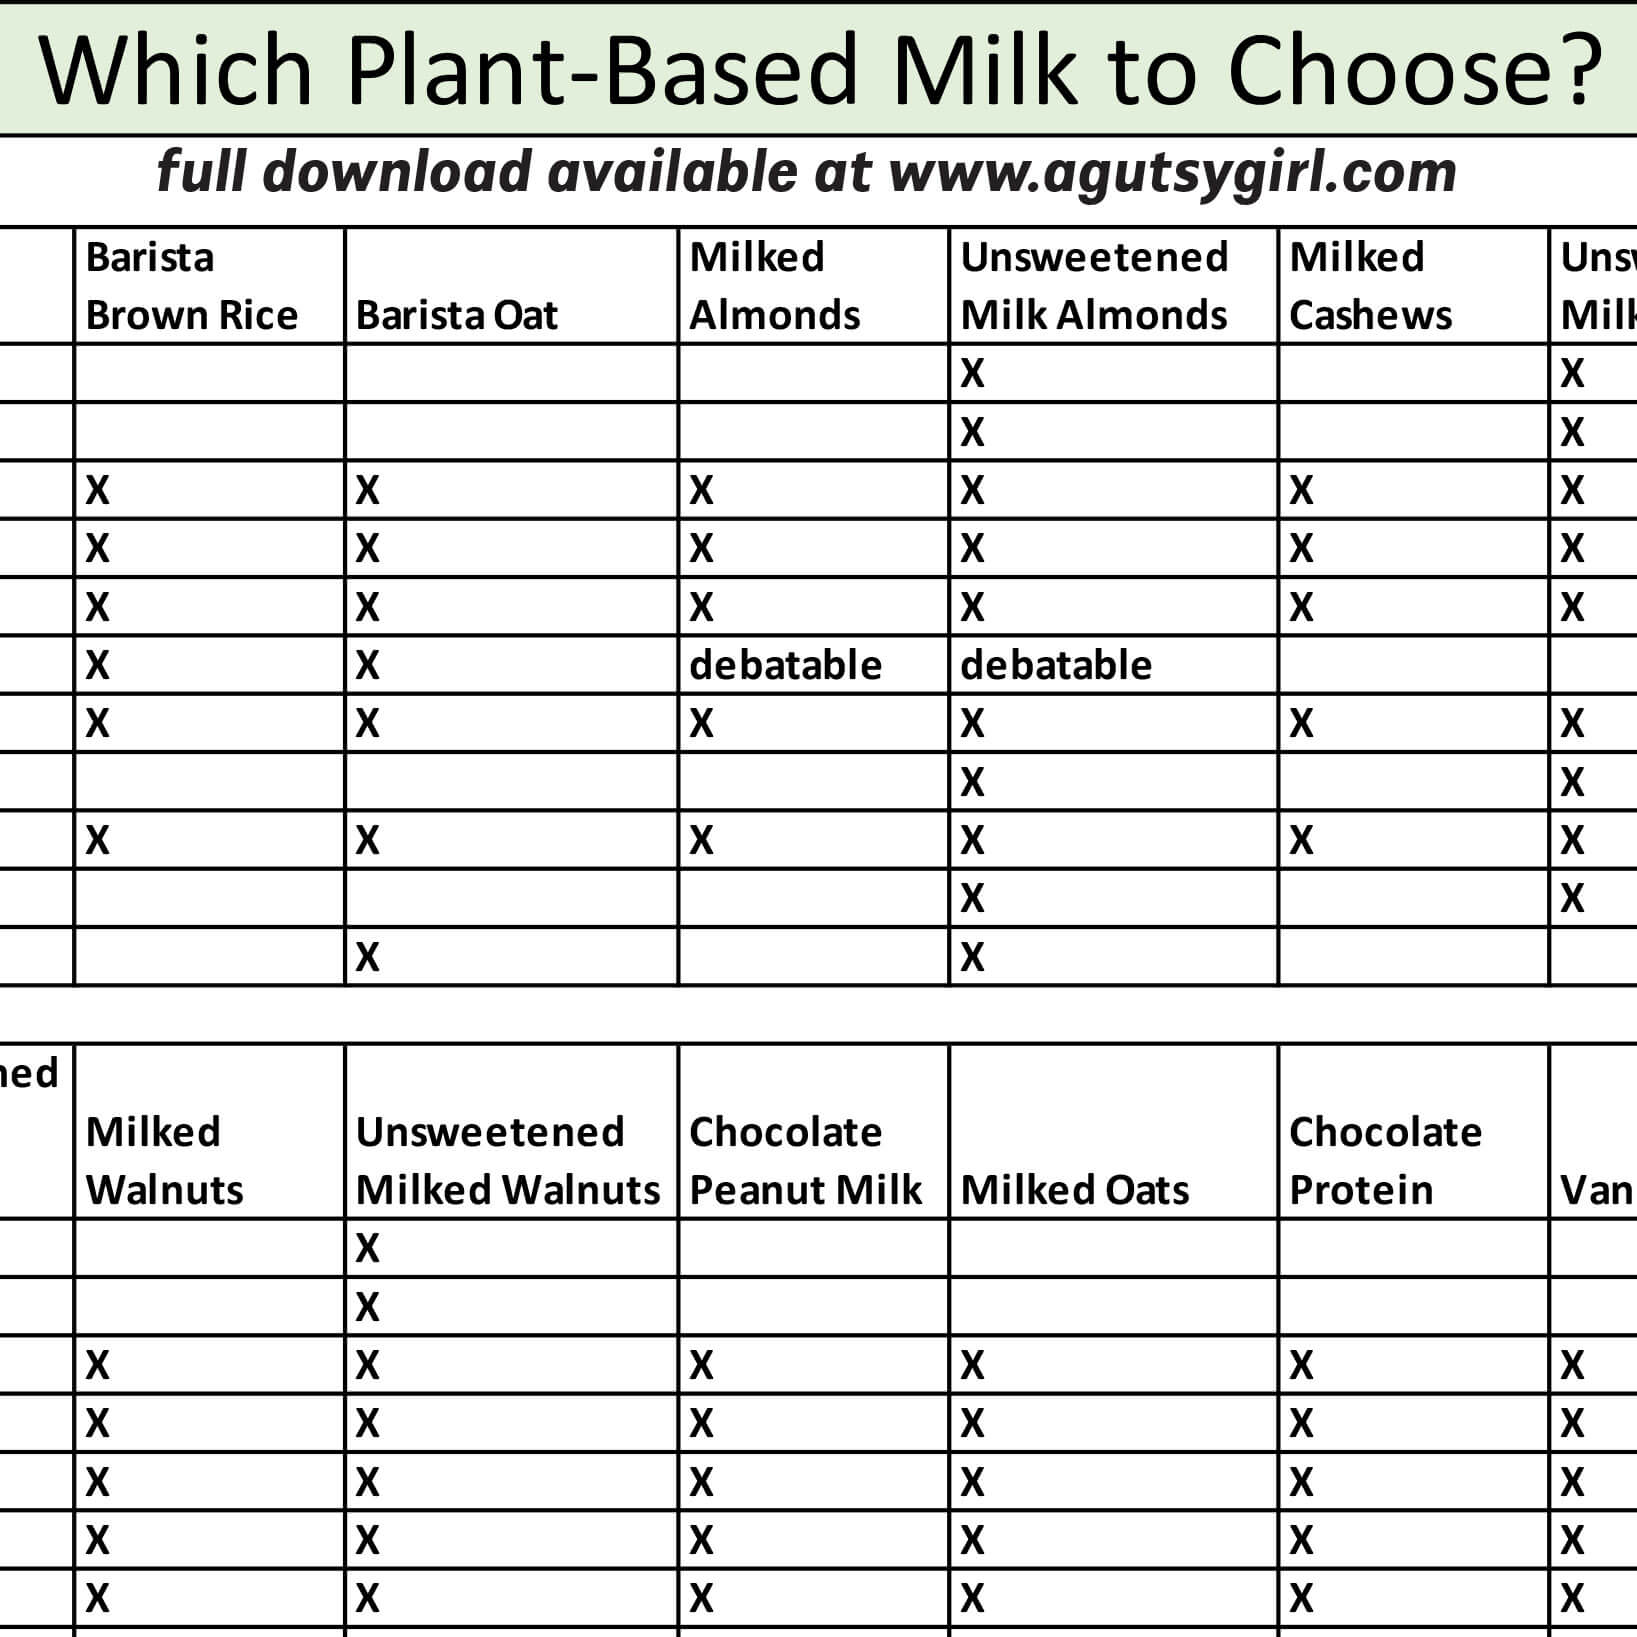 Which Milk to Choose plant based milk for gut health wellness via www.agutsygirl.com #guthealth #dairyfree #plantbased #healthyliving